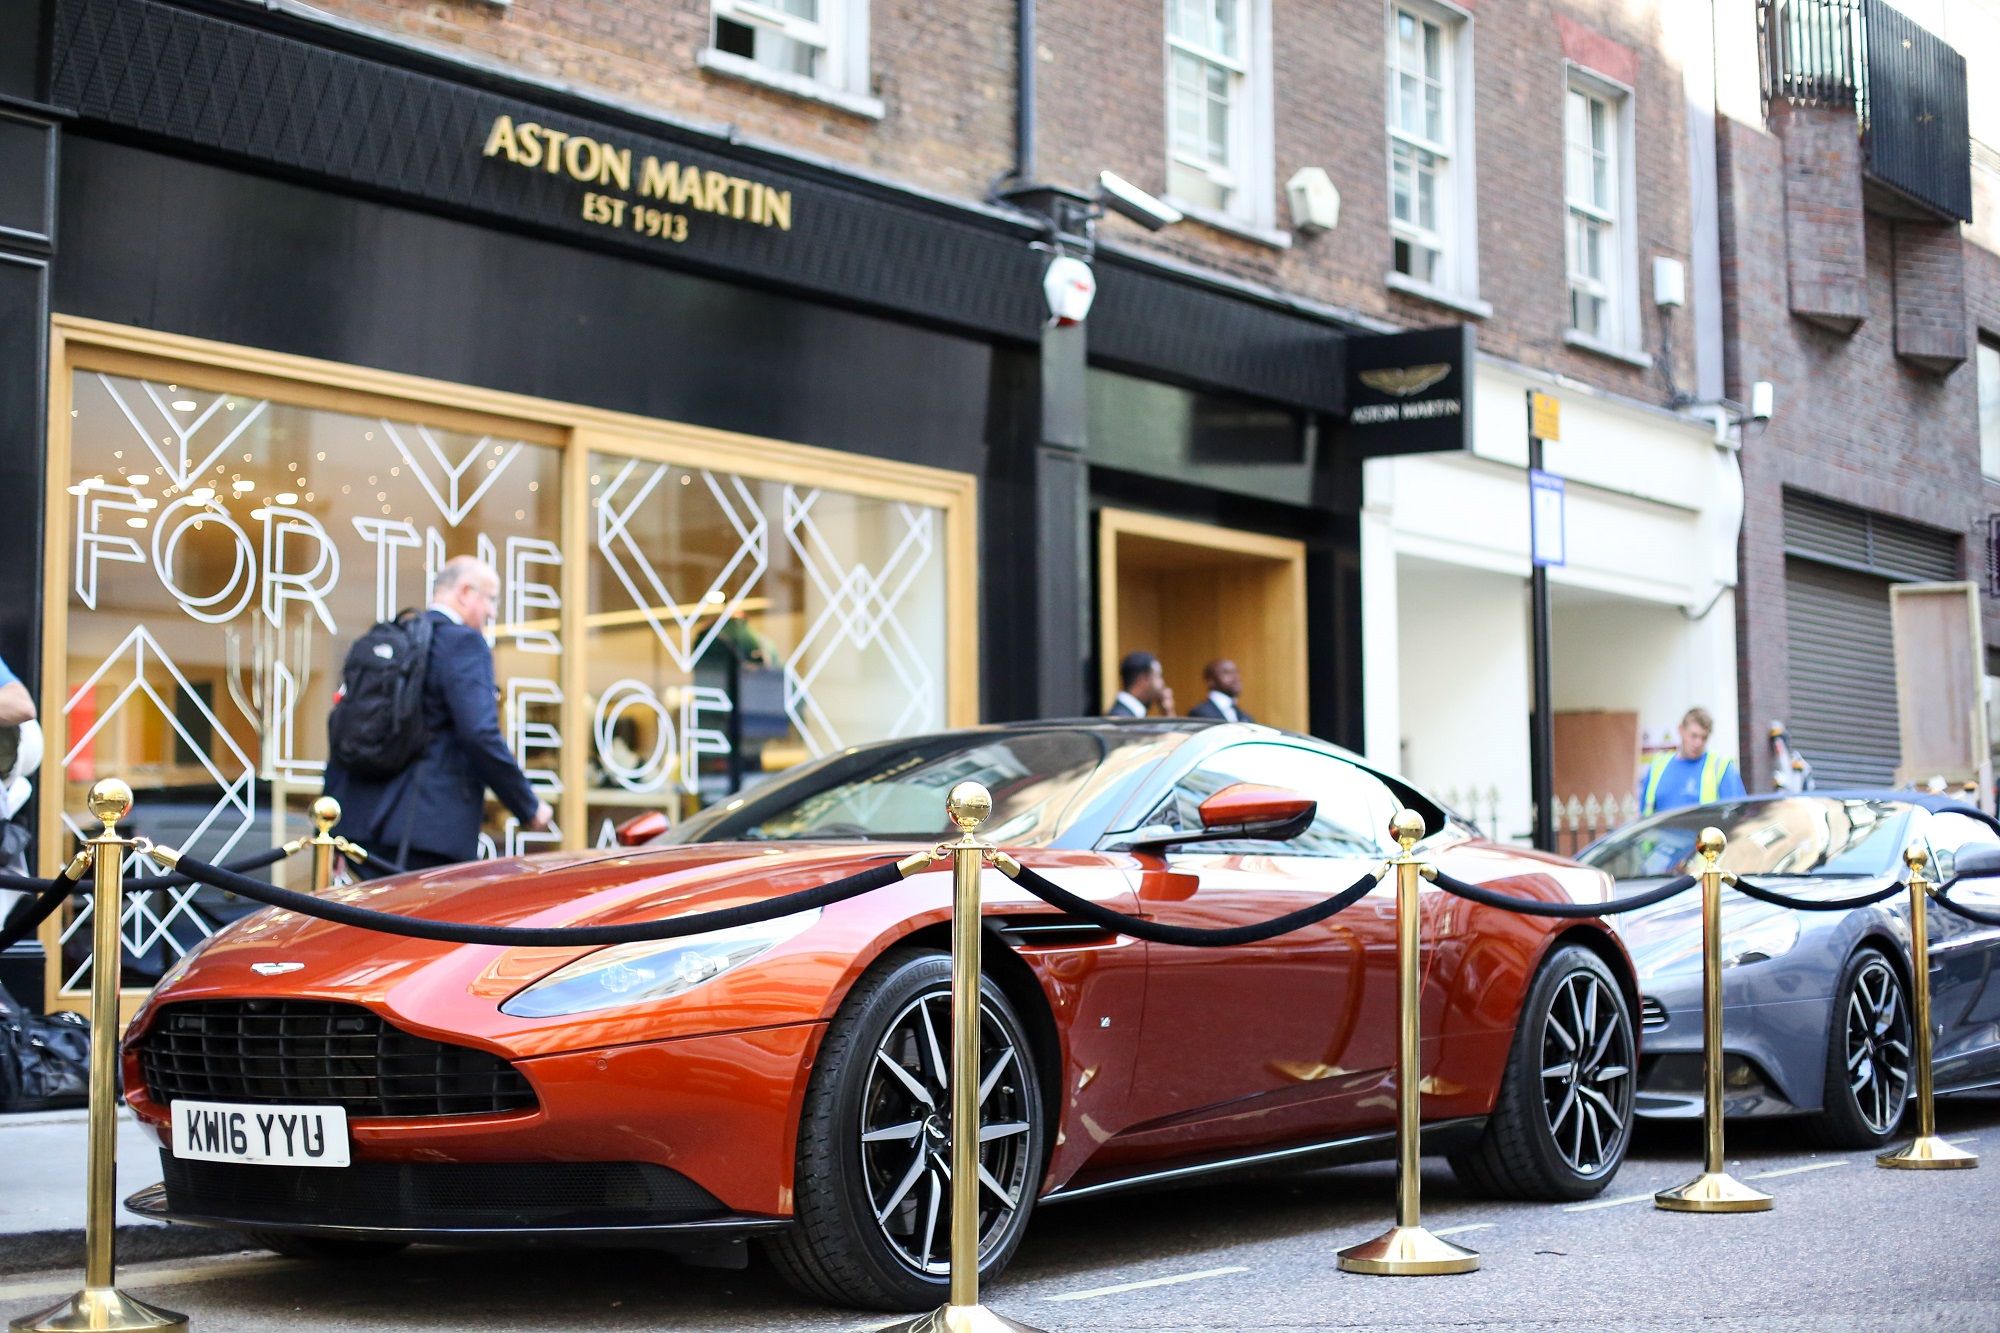 Aston Martin in Talks to Tackle $1.4 Billion Debt Pile - Bloomberg